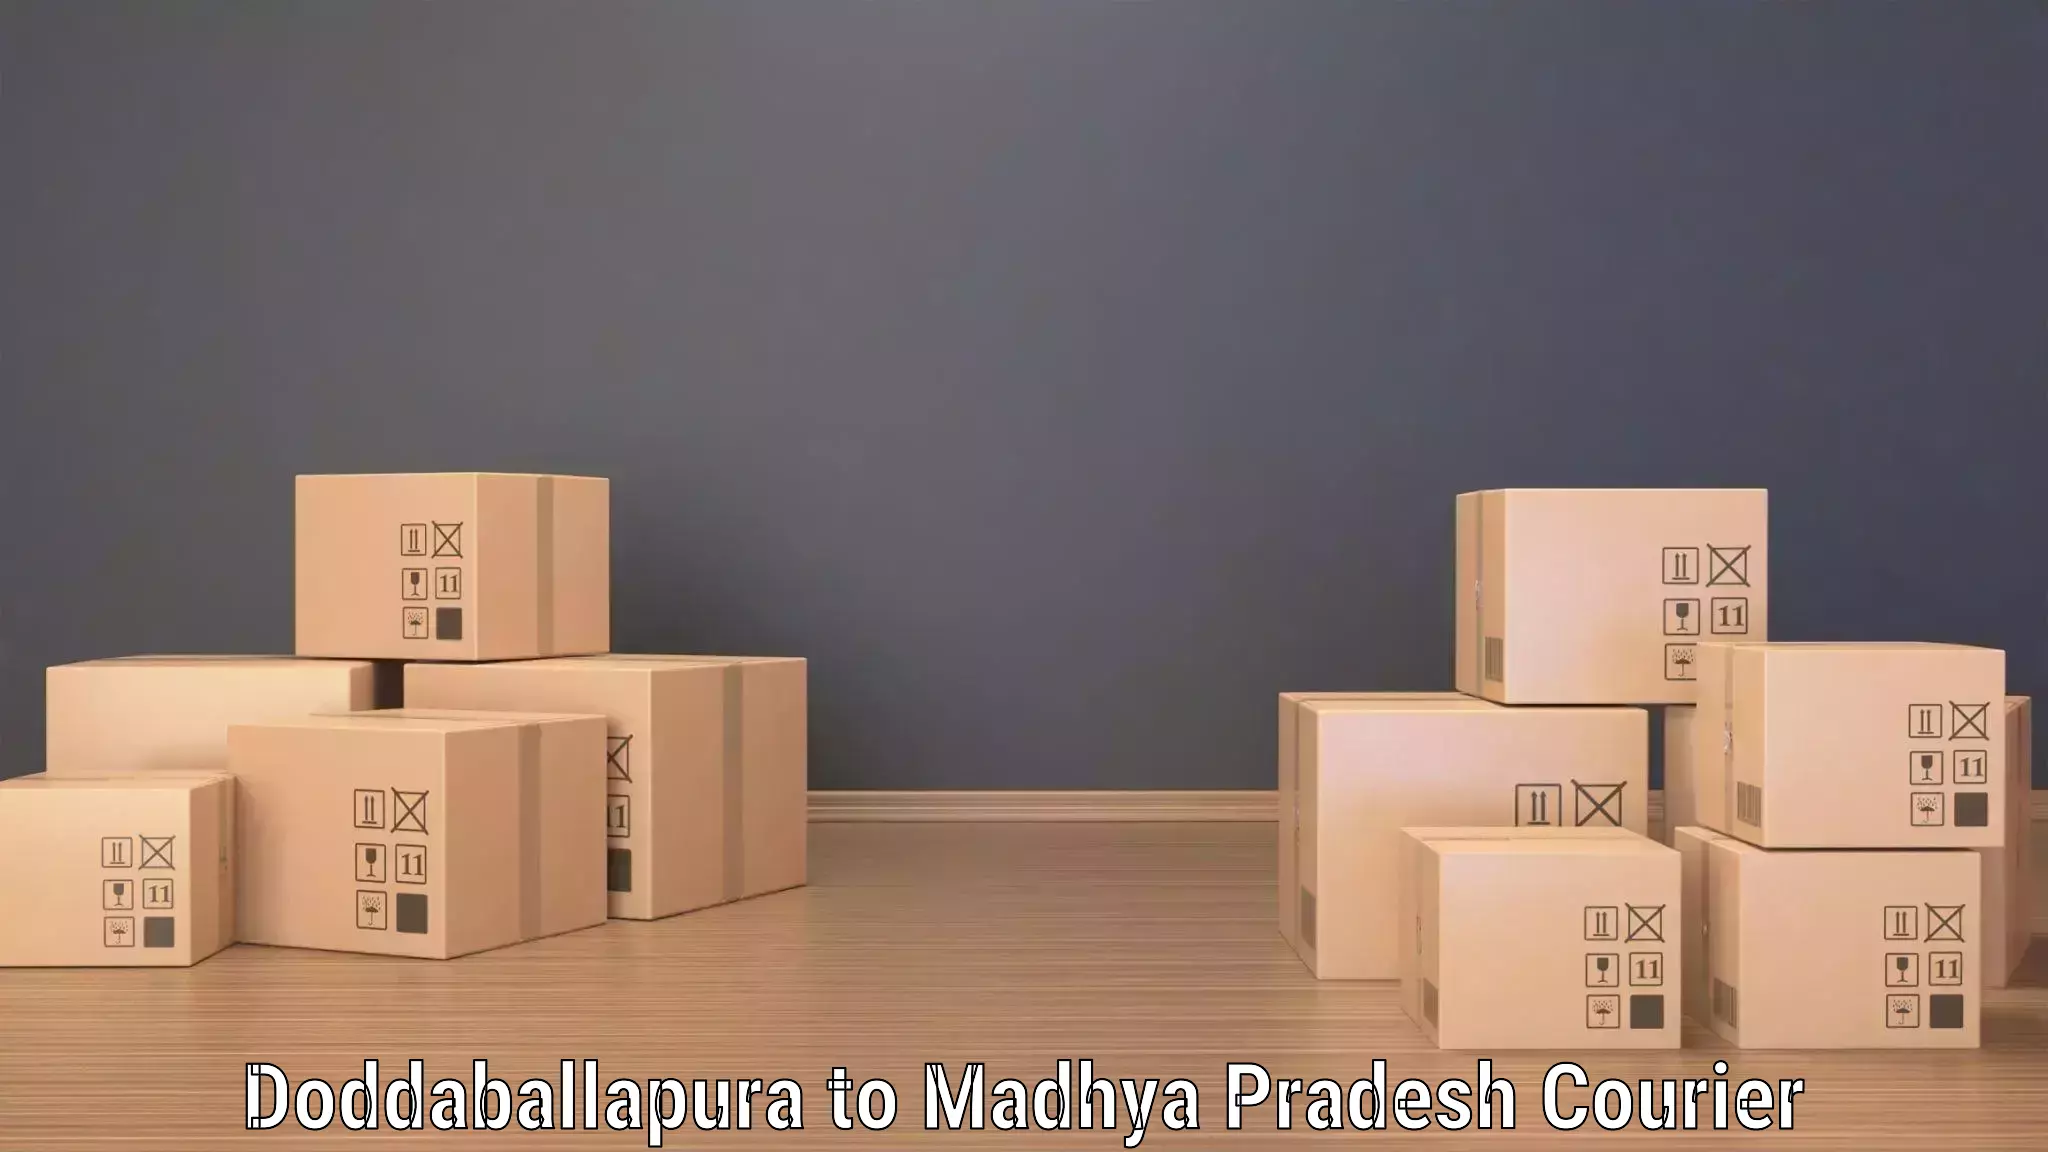 Next-generation courier services Doddaballapura to IIIT Bhopal